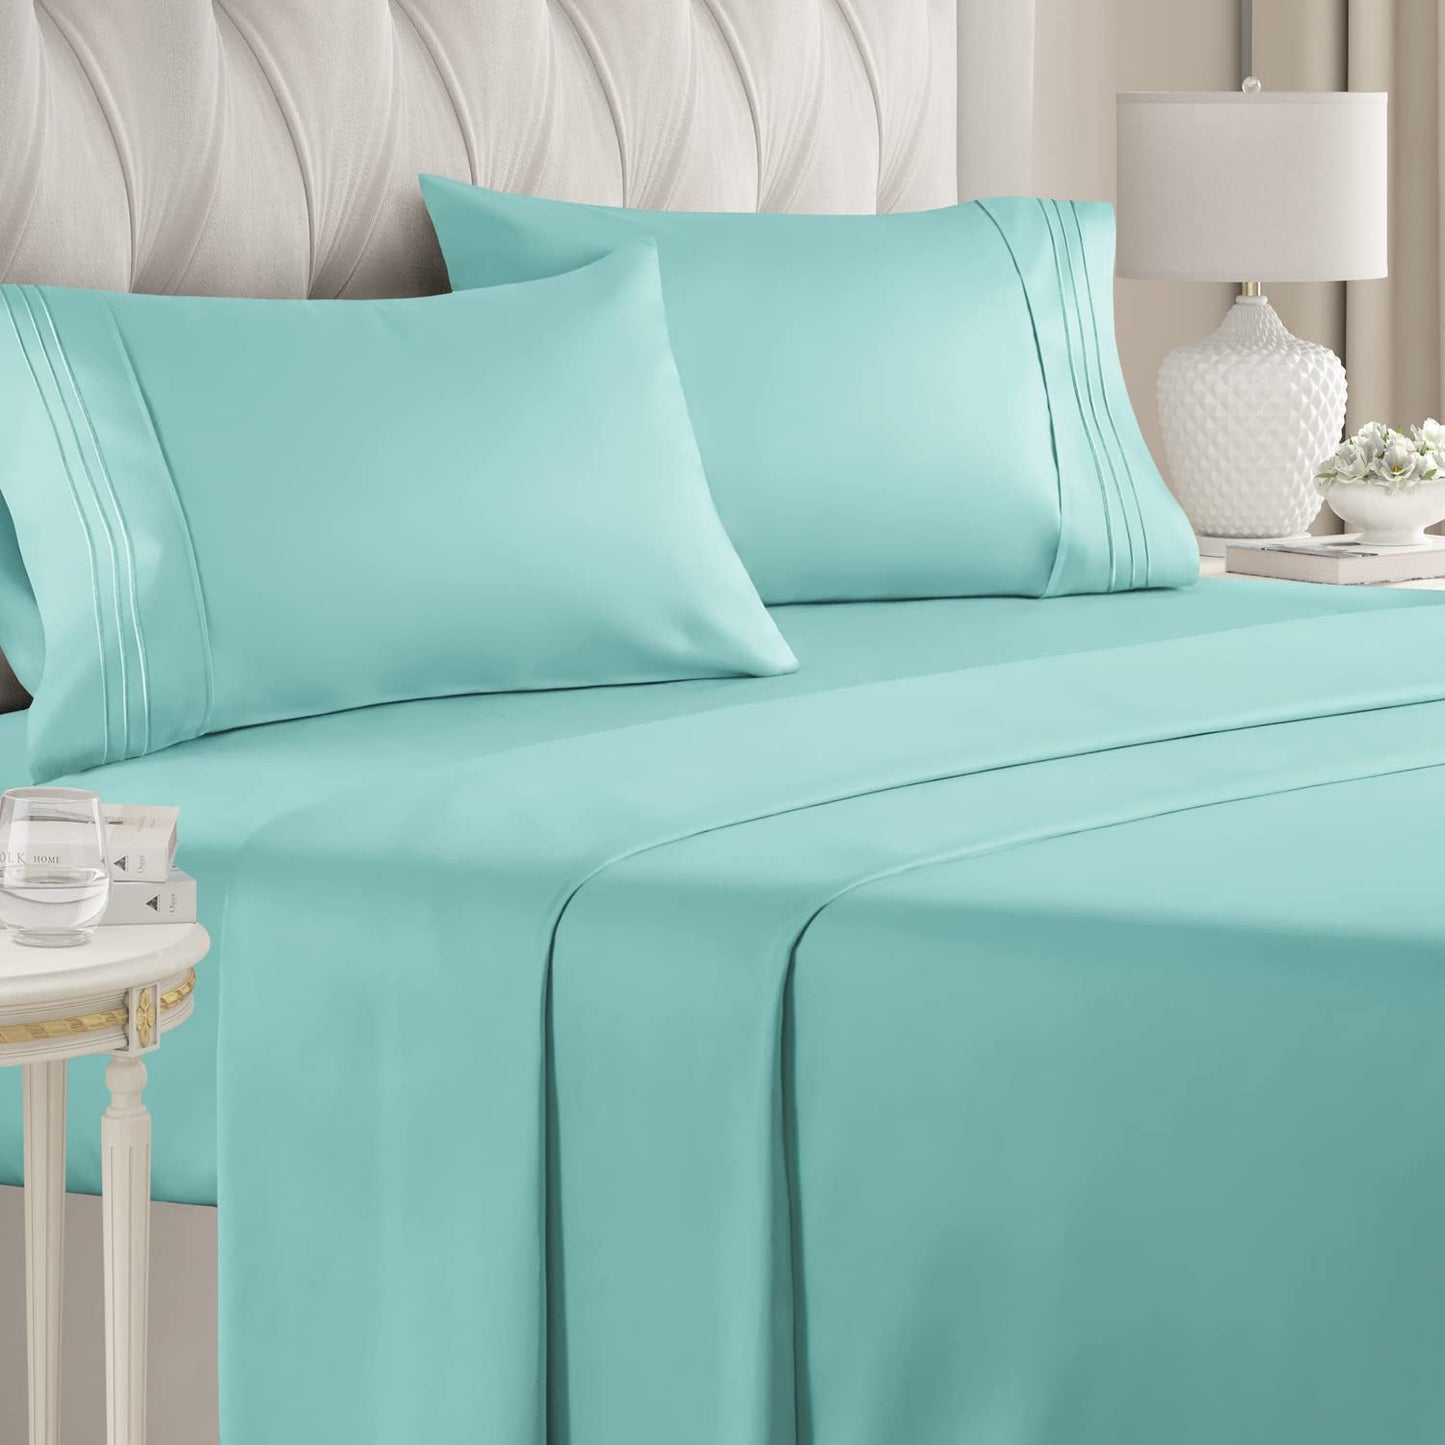 Buy Aqua Blue Sheet Set Egyptian Cotton Bed Linens at Egyptianhomelinens.com 